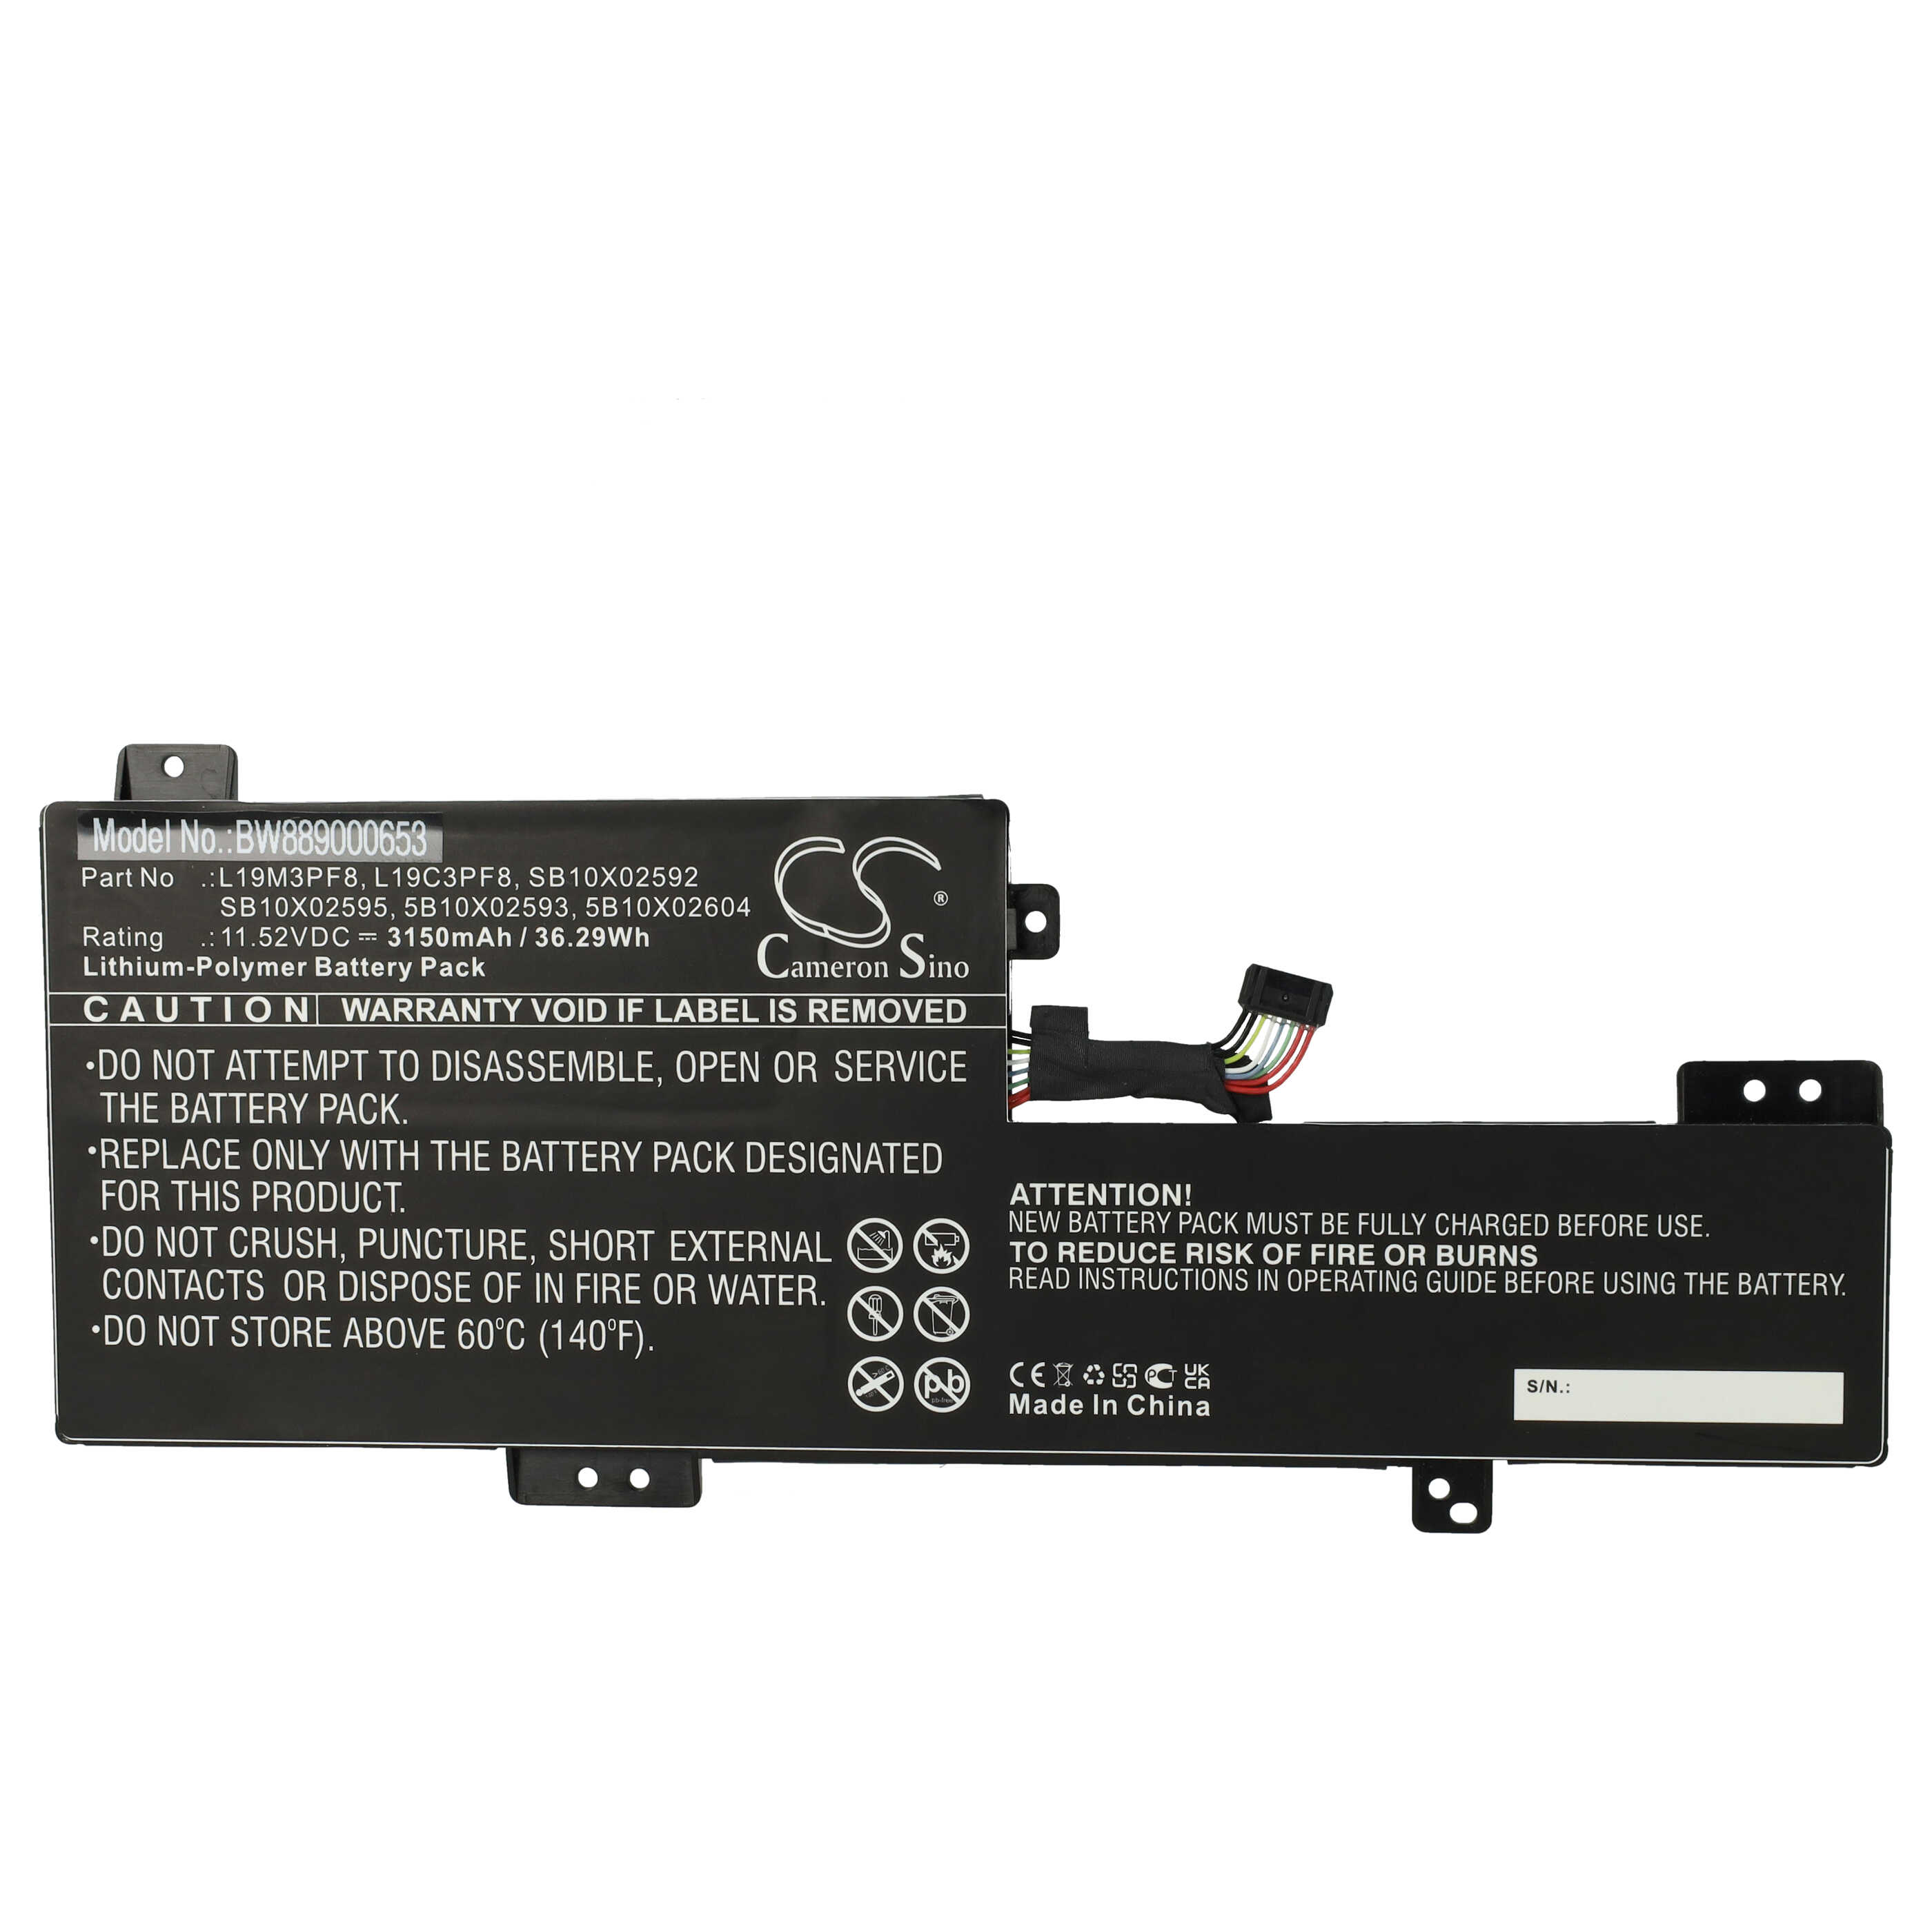 Batterie remplace Lenovo 5B10X02593, 5B10X02604 pour ordinateur portable - 3150mAh 11,52V Li-polymère